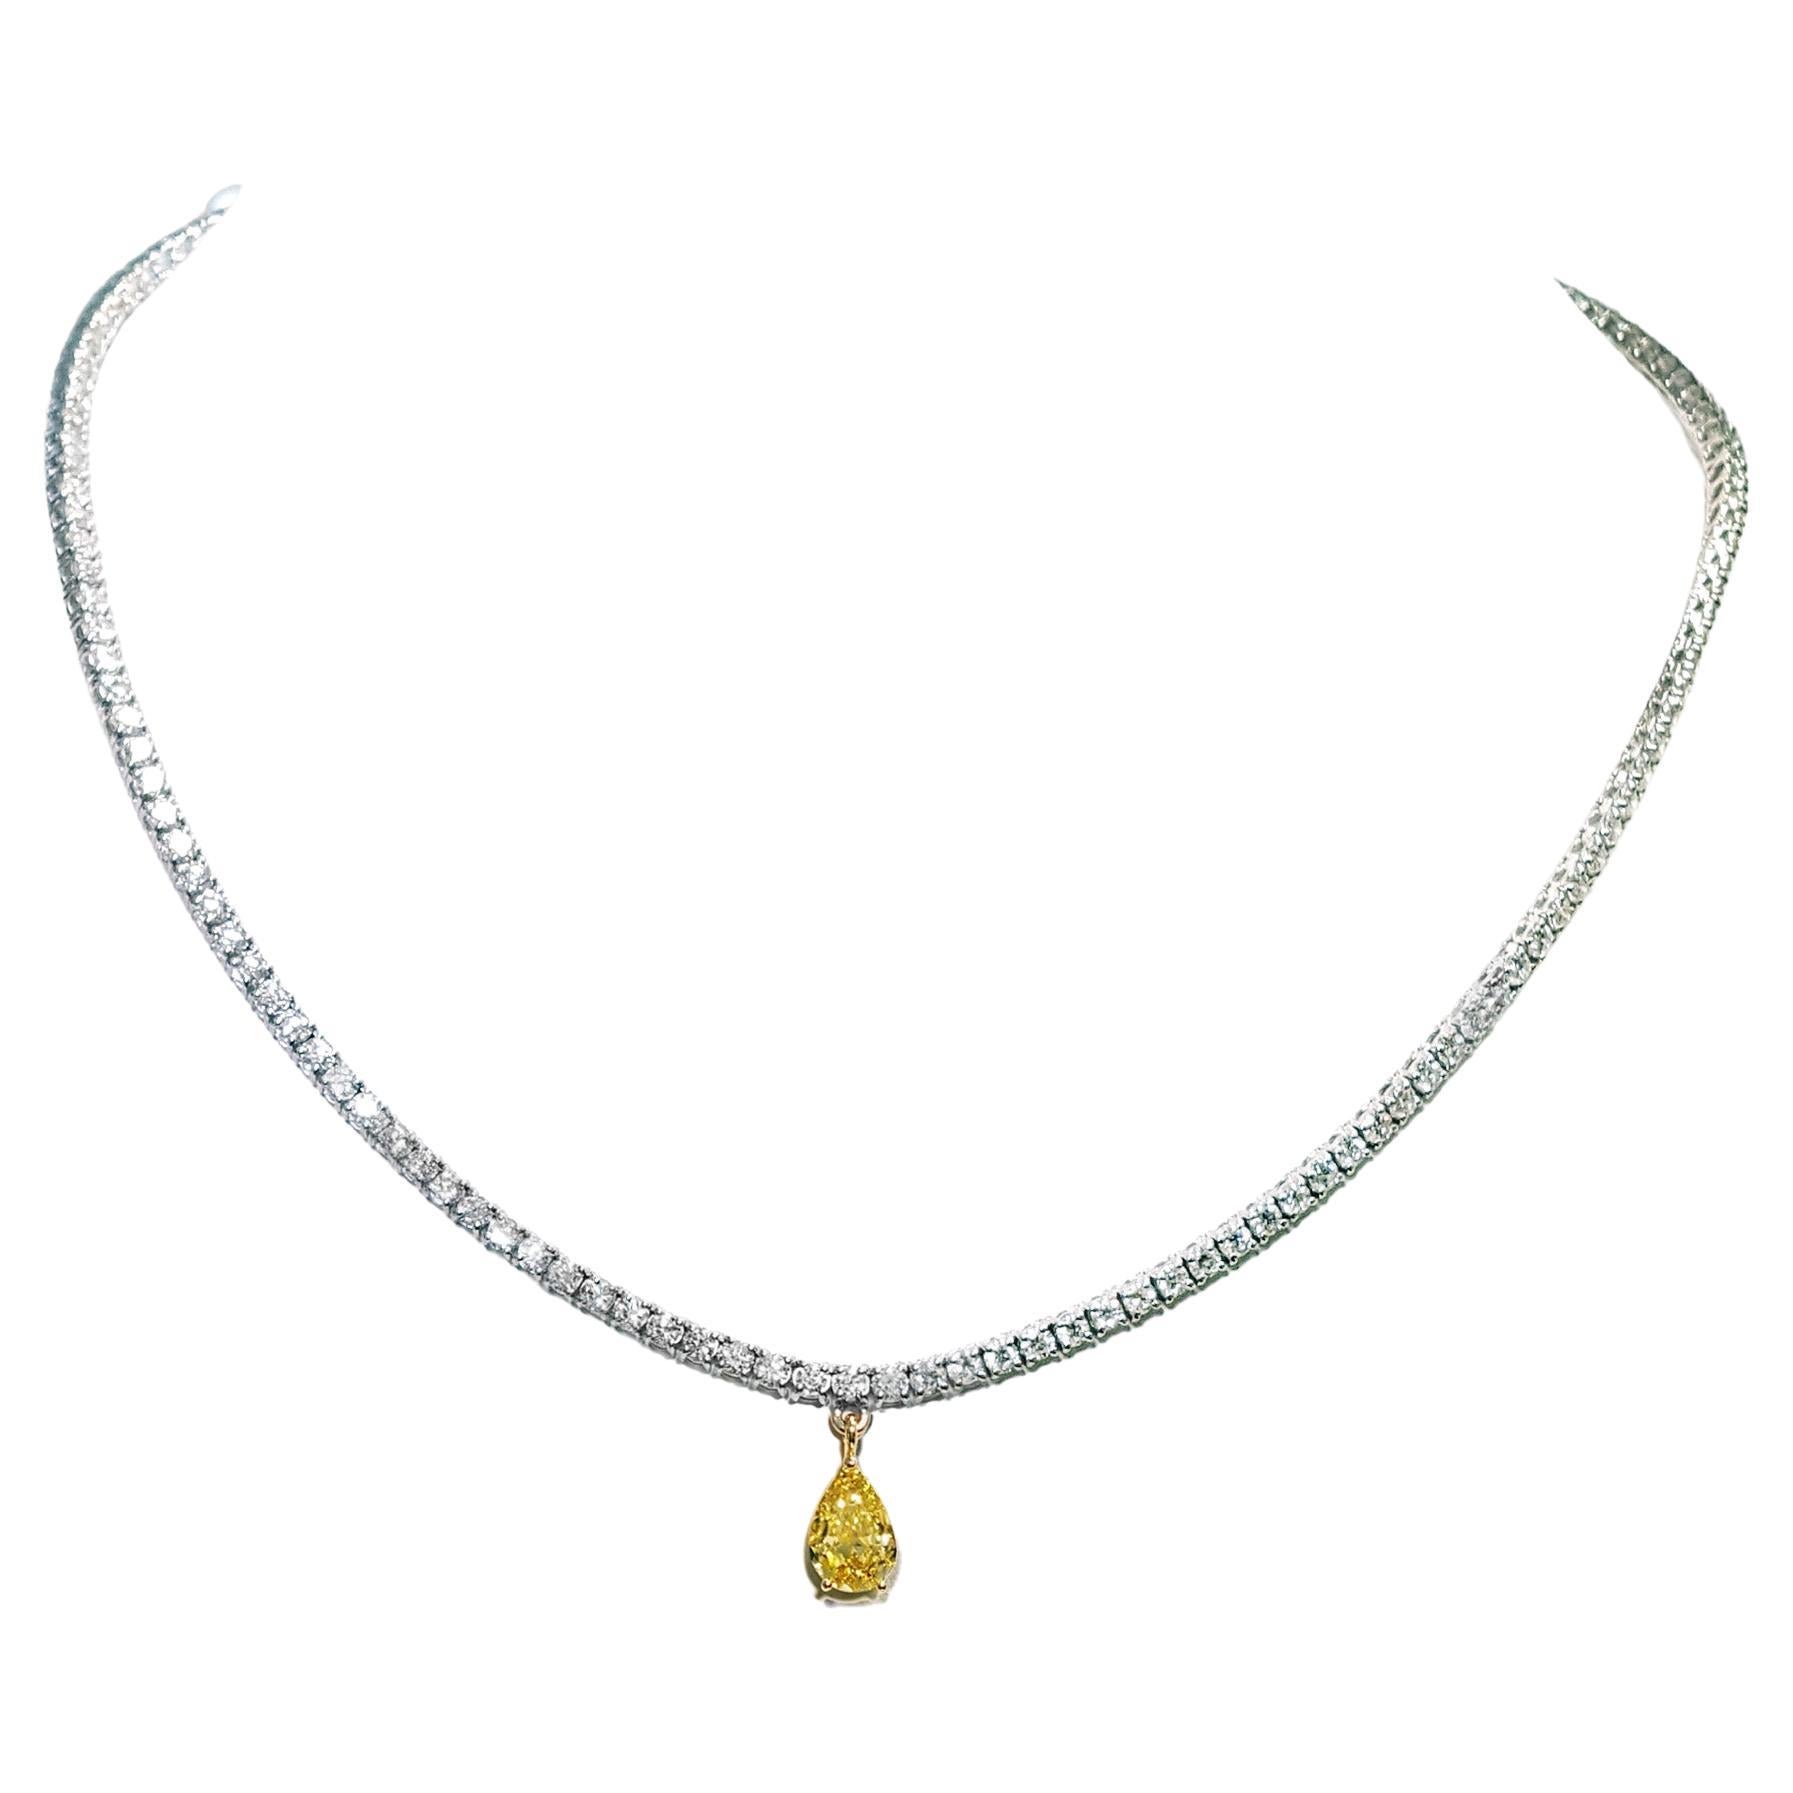 10.66 Carat Fancy Intense Yellow Pendant  & Diamond Tennis Necklace In 18k Gold. For Sale